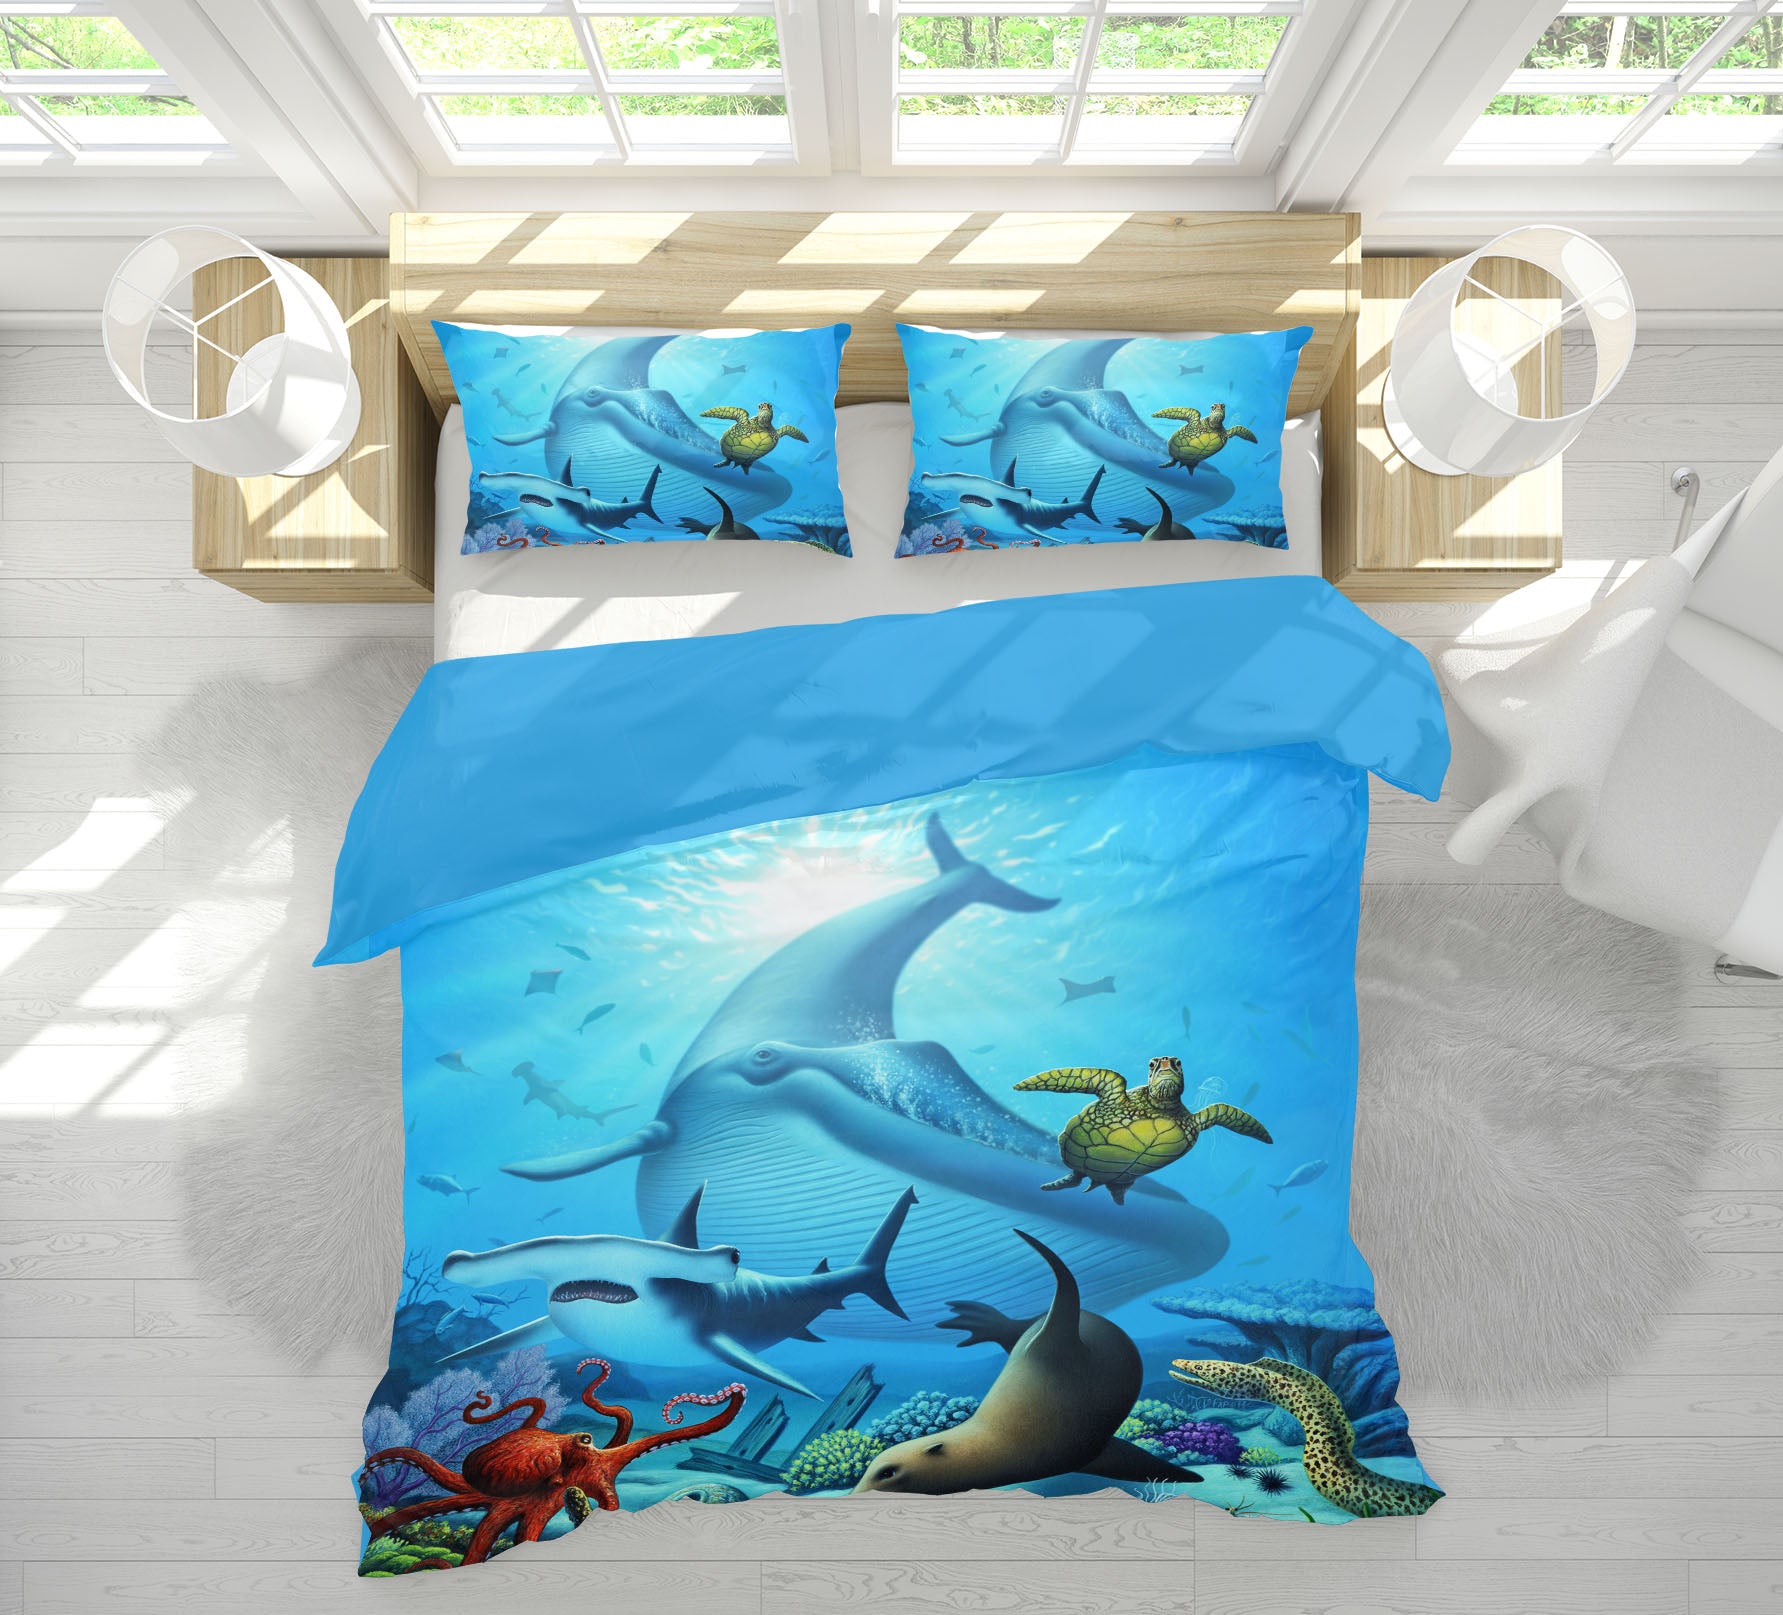 3D Ocean Life 18068 Jerry LoFaro bedding Bed Pillowcases Quilt